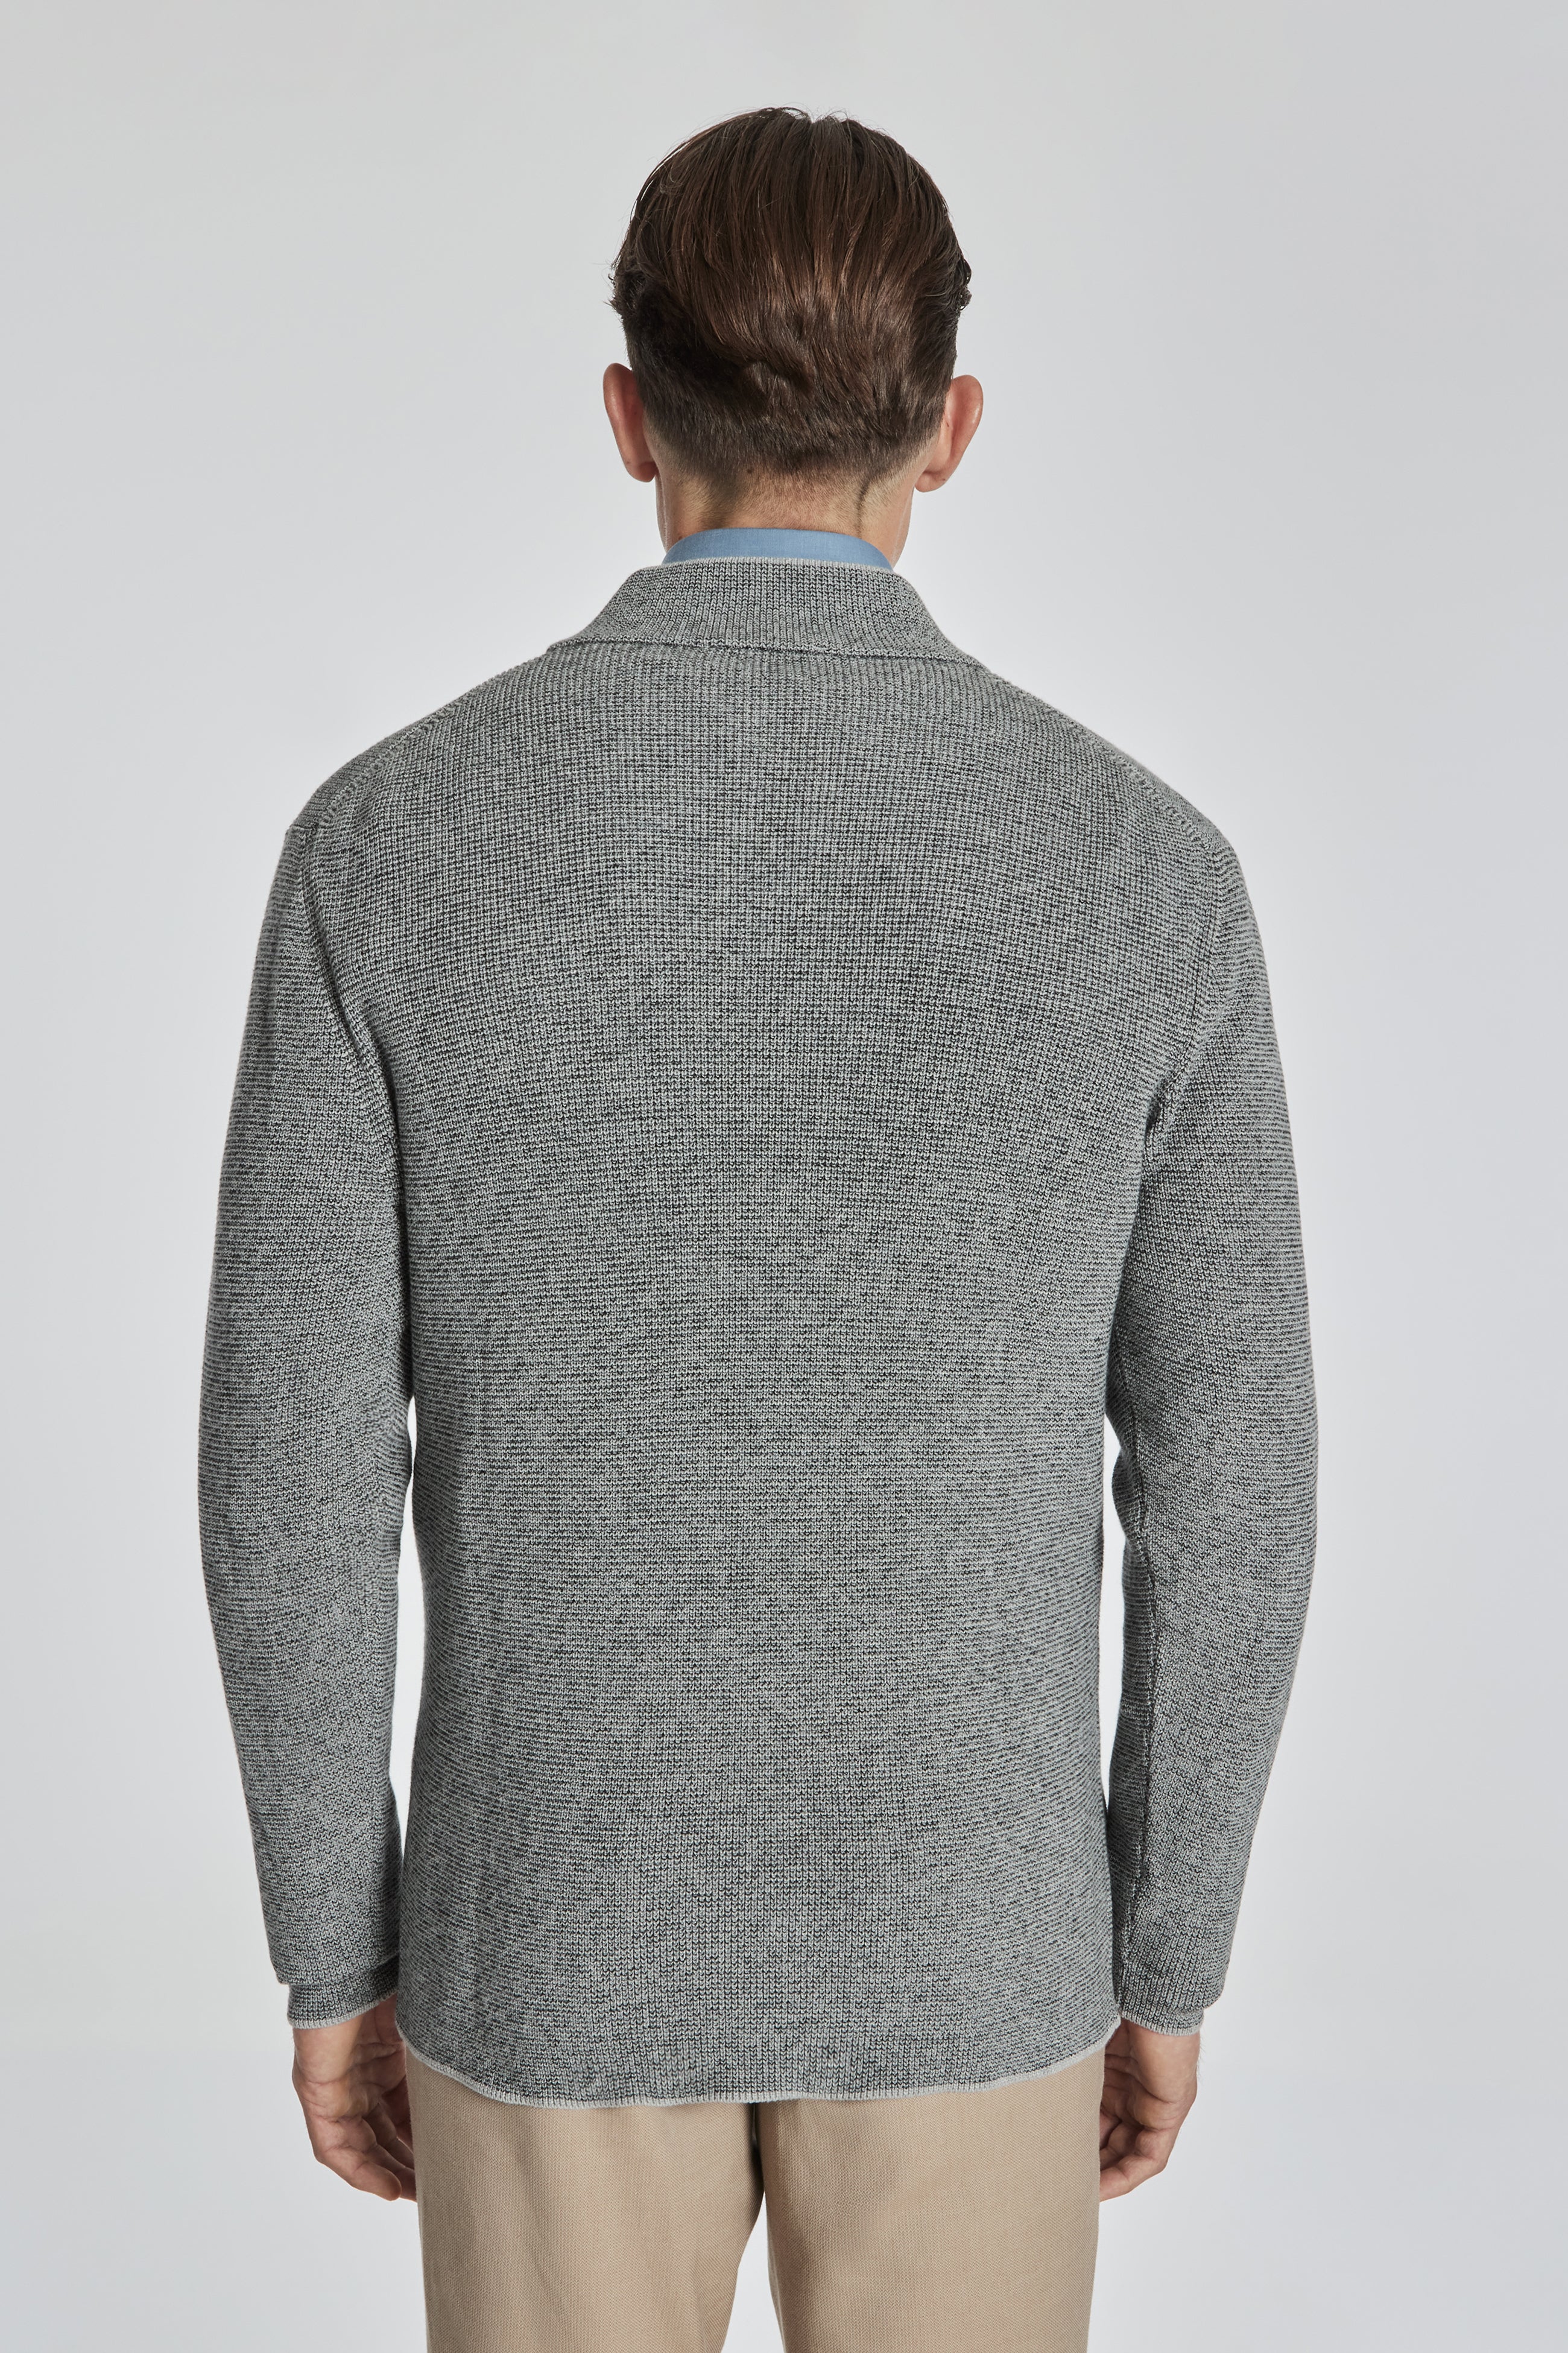 Daulac Melange Cotton Quarter Zip Sweater in Charcoal